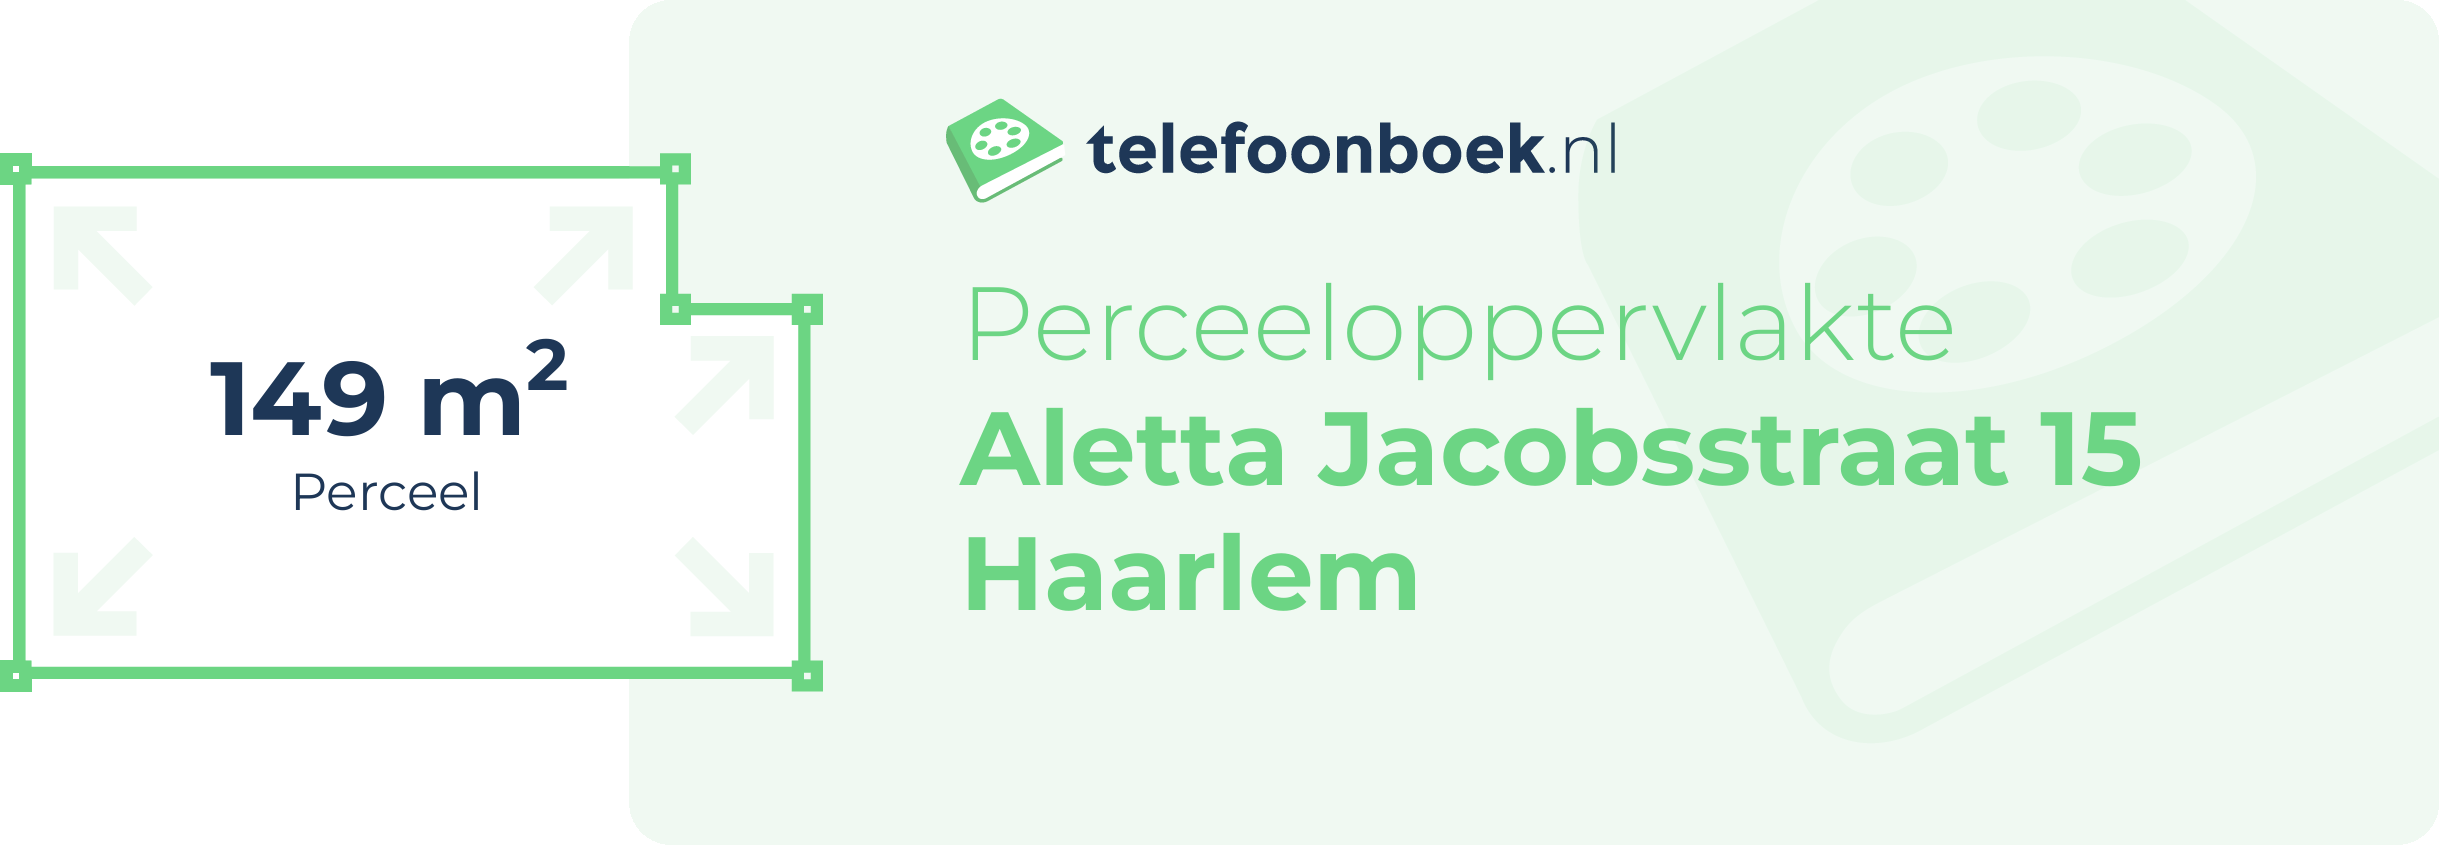 Perceeloppervlakte Aletta Jacobsstraat 15 Haarlem